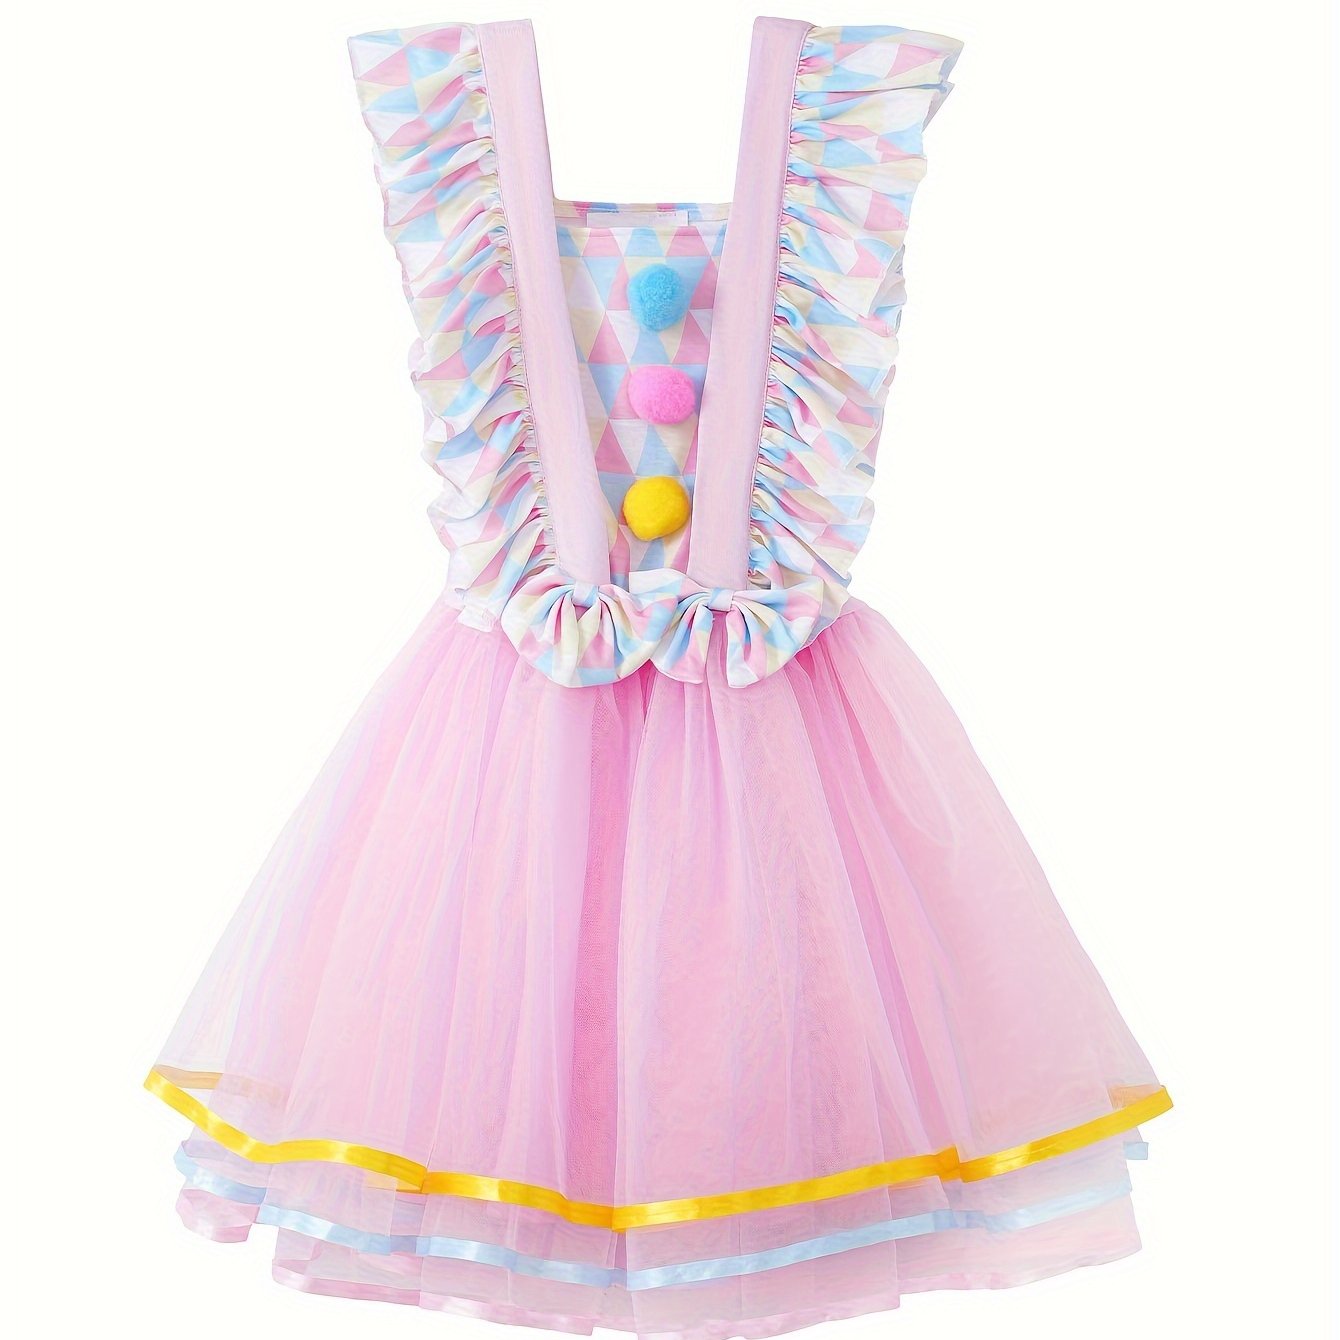 girls dreamy sweet splicing argyle pattern ruffle trim tutu dress for carnival party performance gift girls dress up